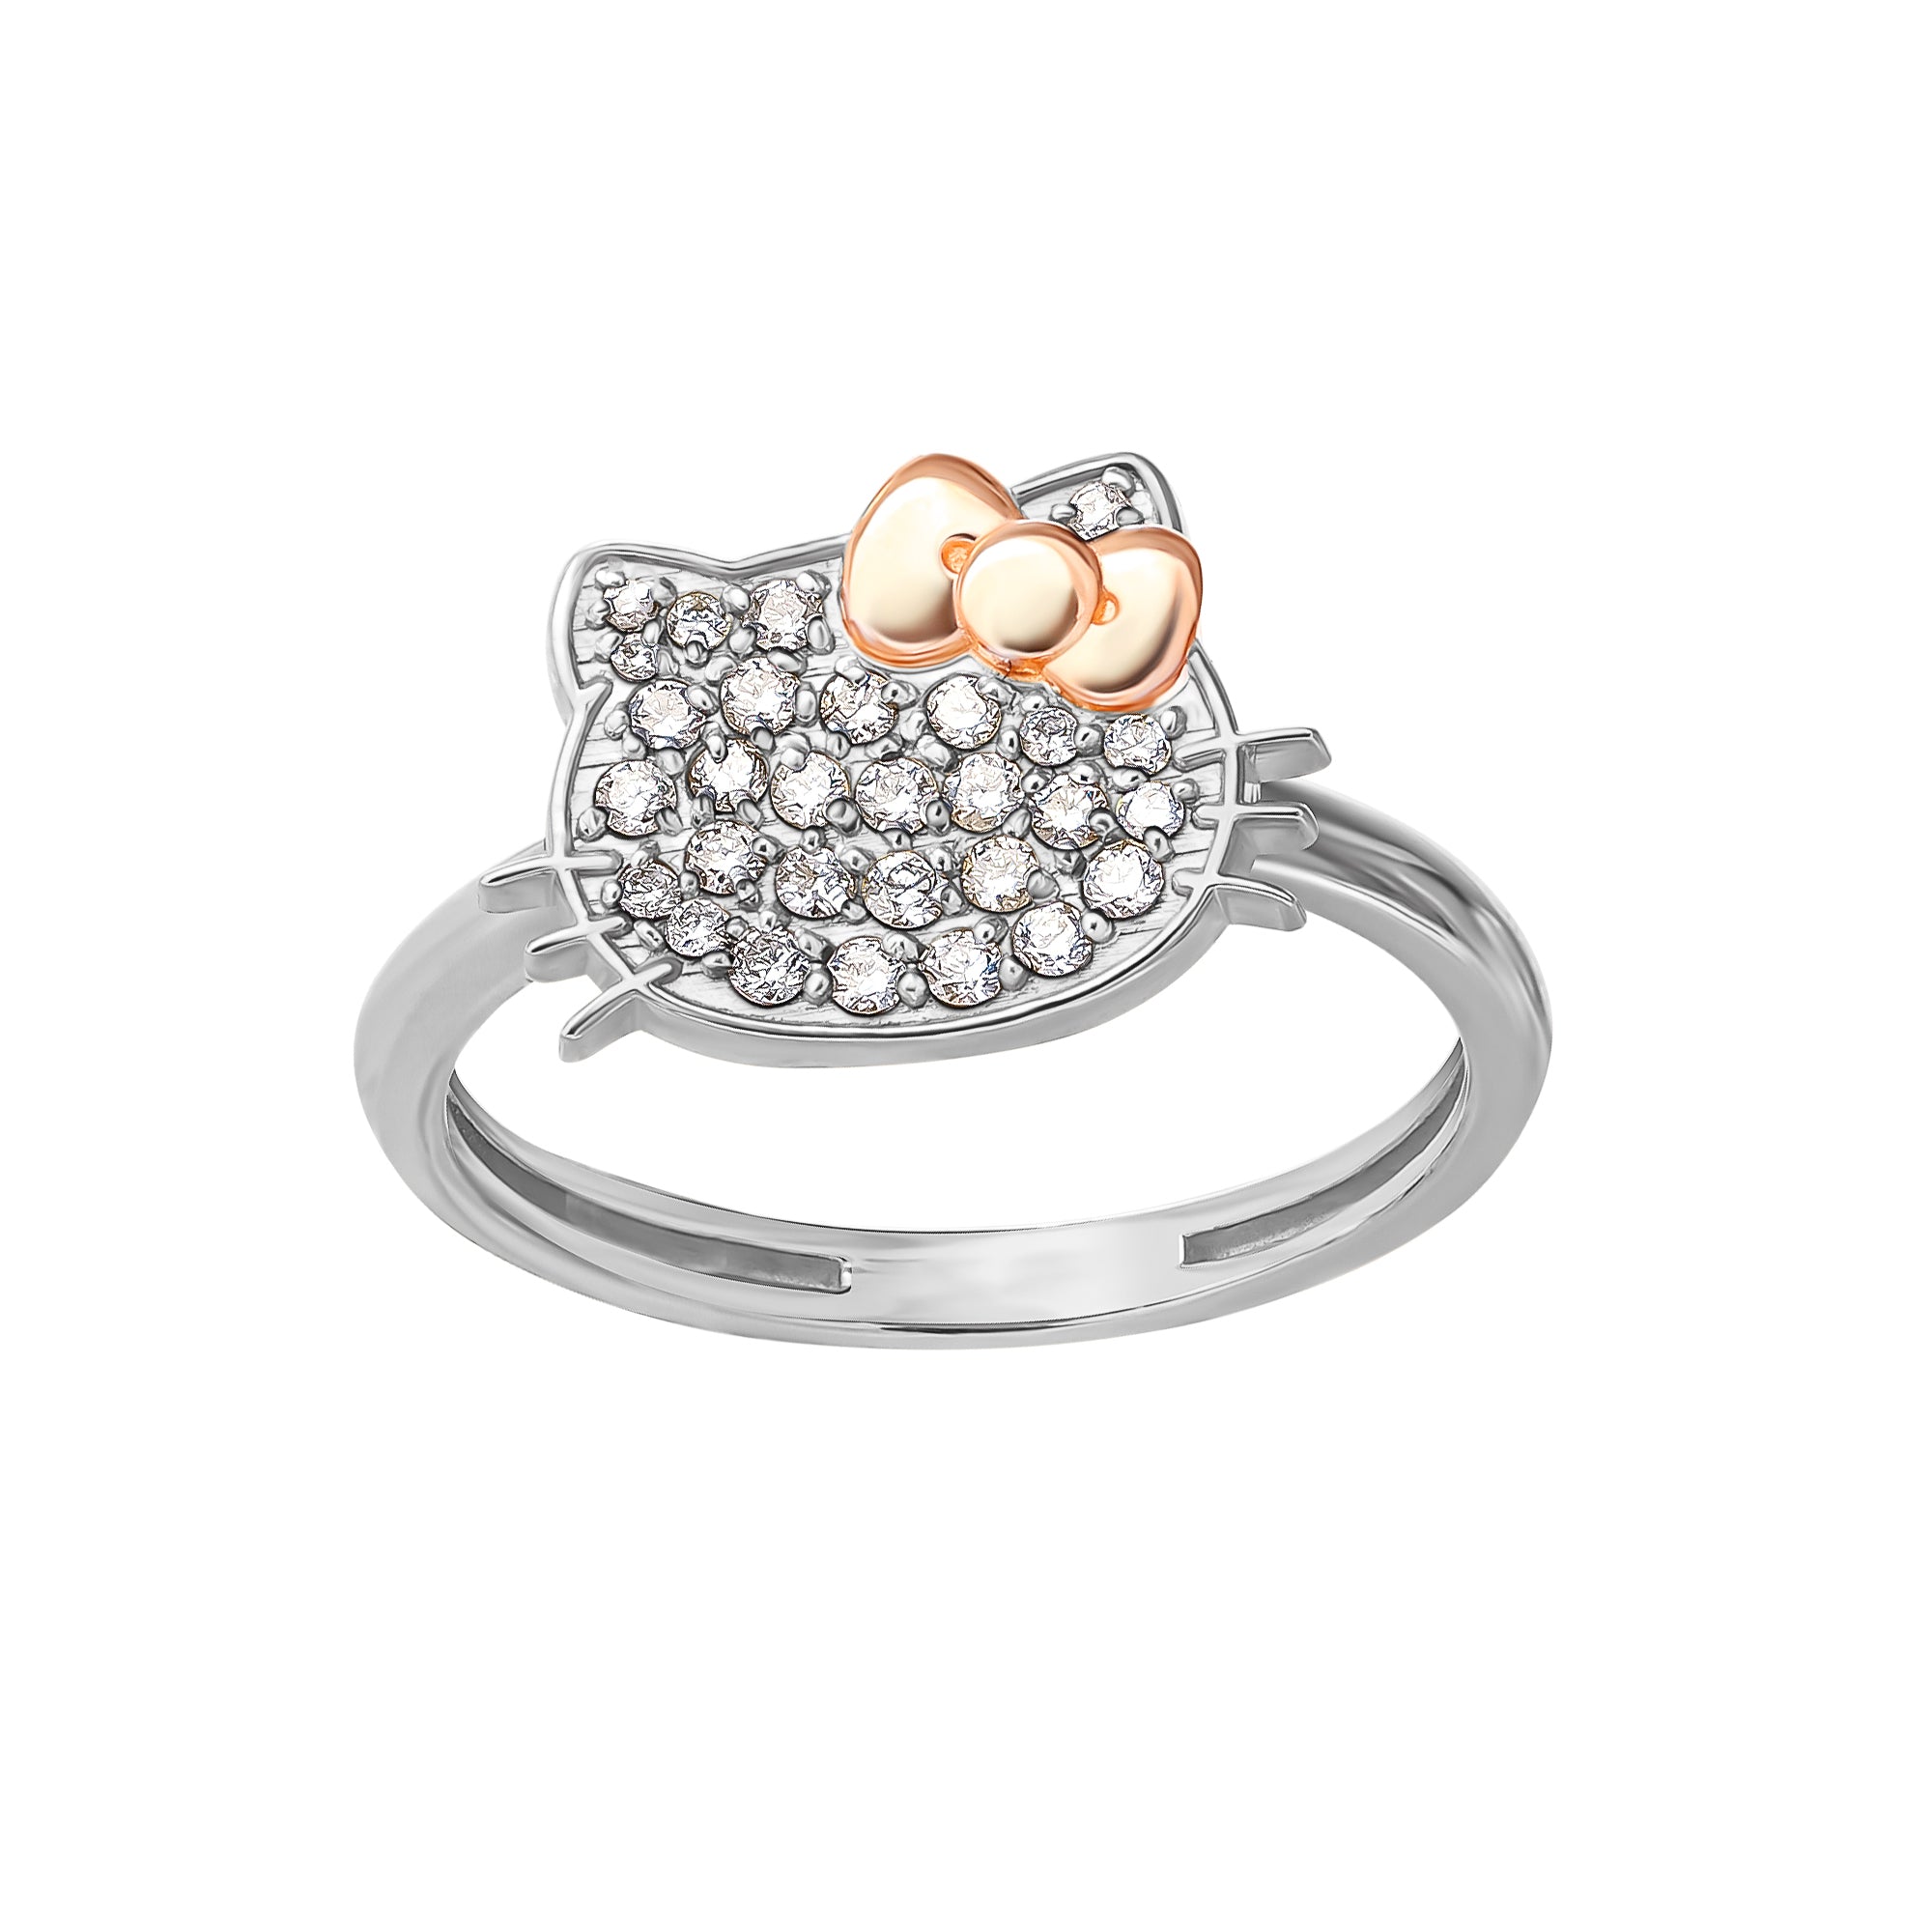 Hello Kitty 14K White Gold Pavé Diamond Ring (Size 7 Only) Jewelry JACMEL JEWELRY INC   